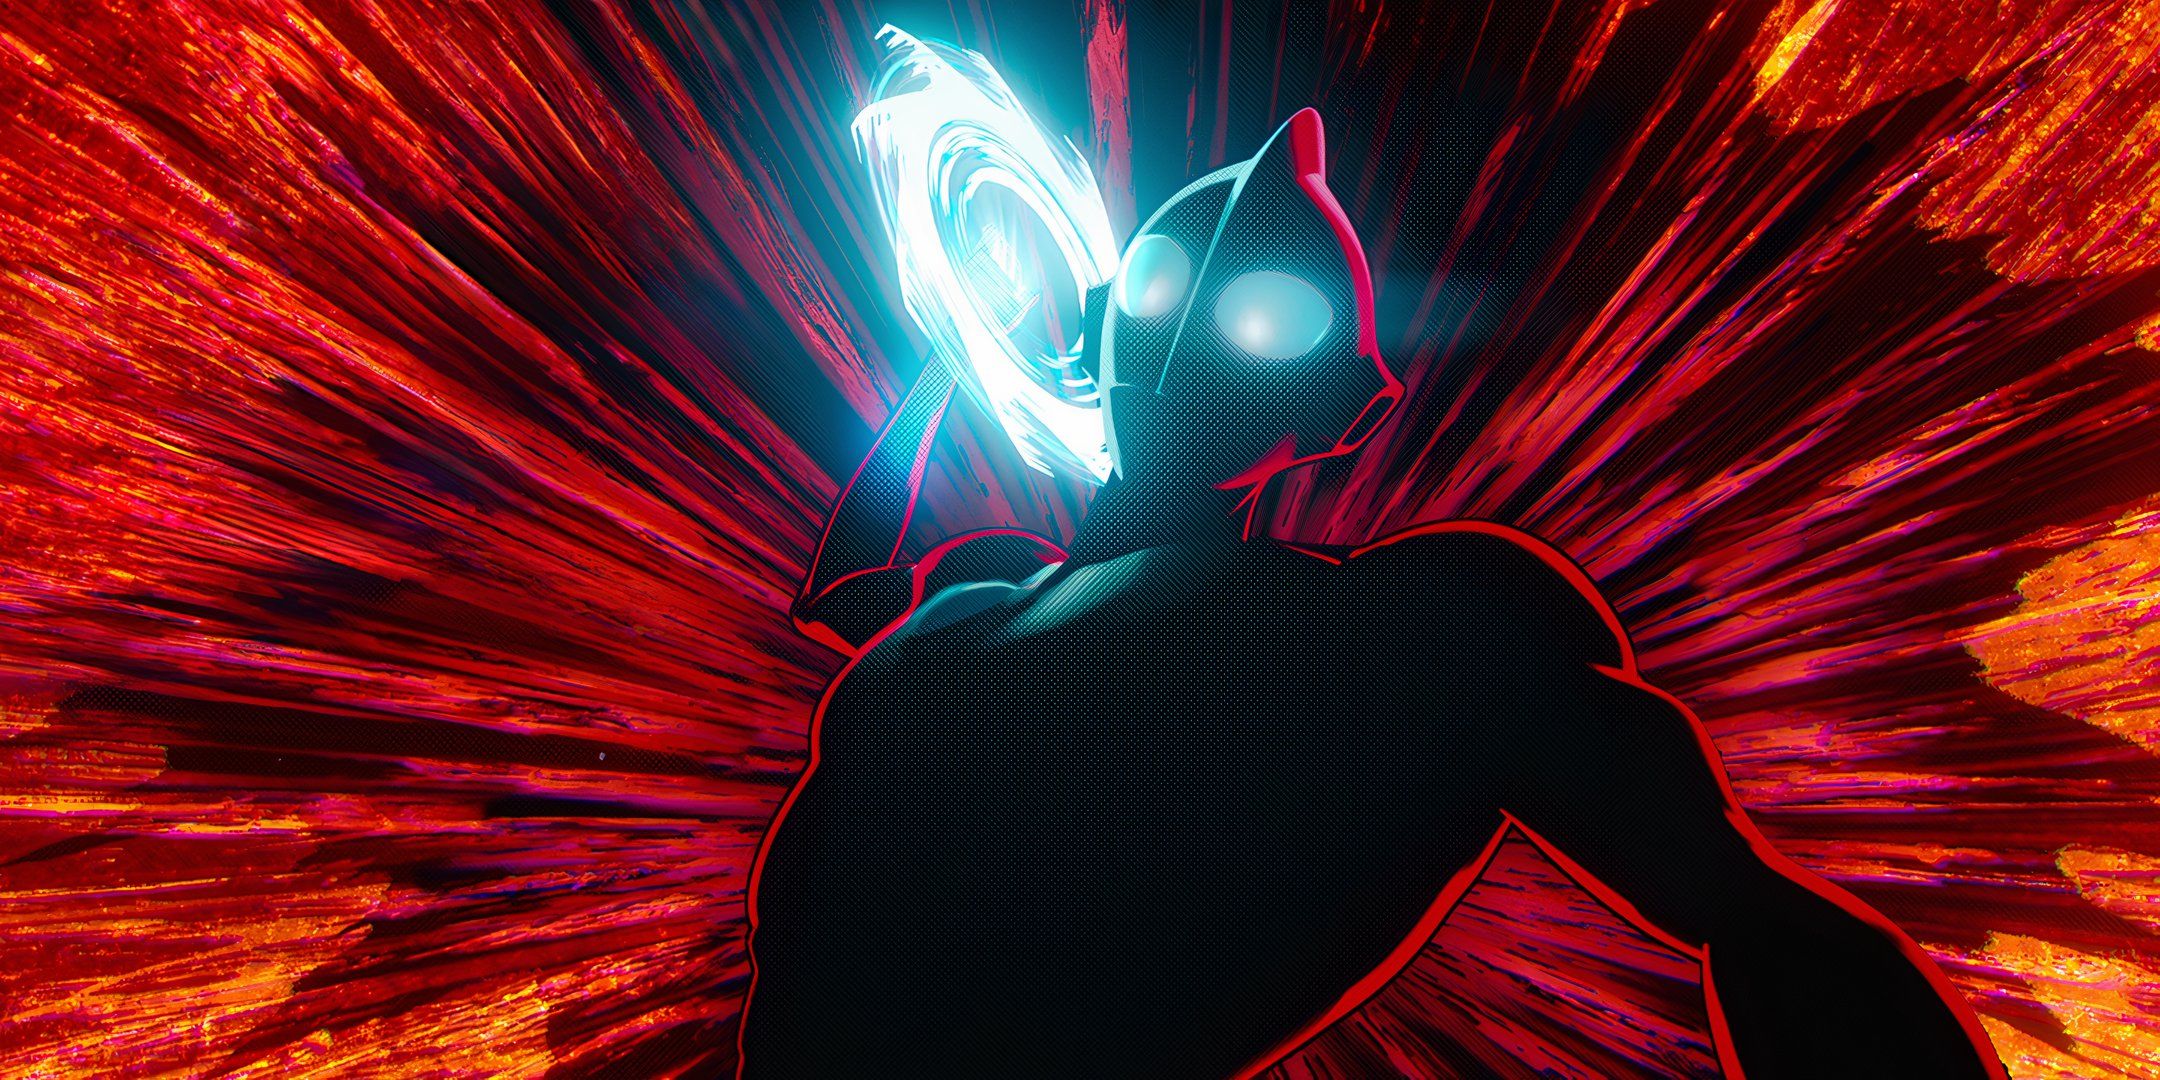 Ultraman powering up and bringing down an energy punch in Ultraman Rising